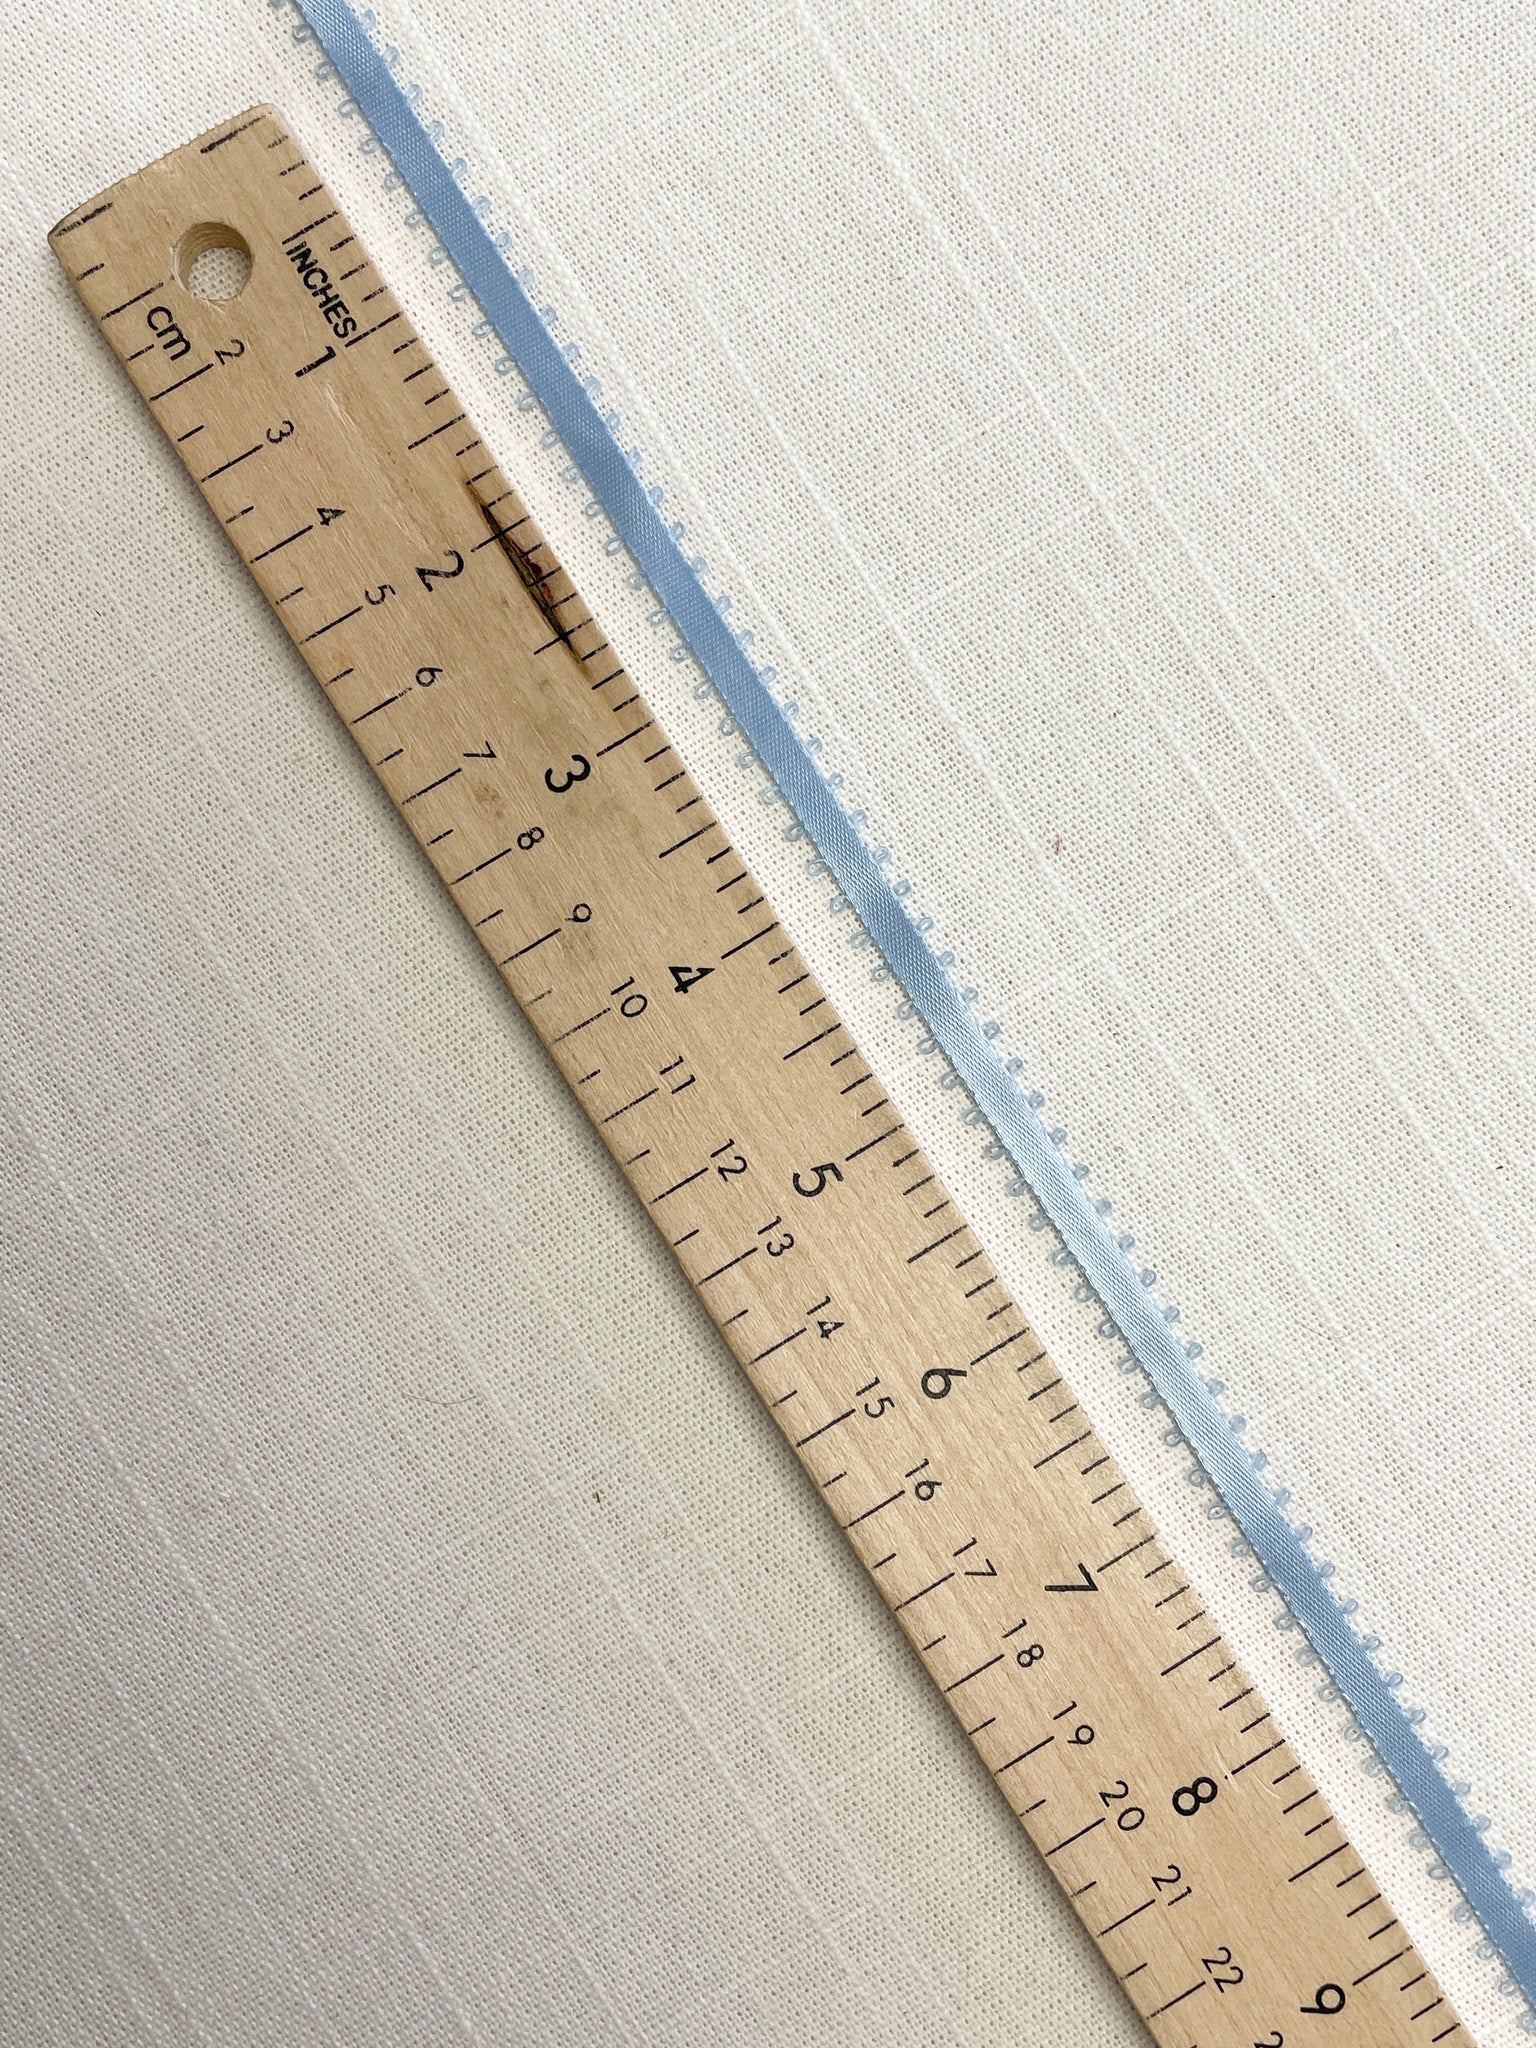 3 1/3 YD Polyester Picot Satin Ribbon - Light Blue